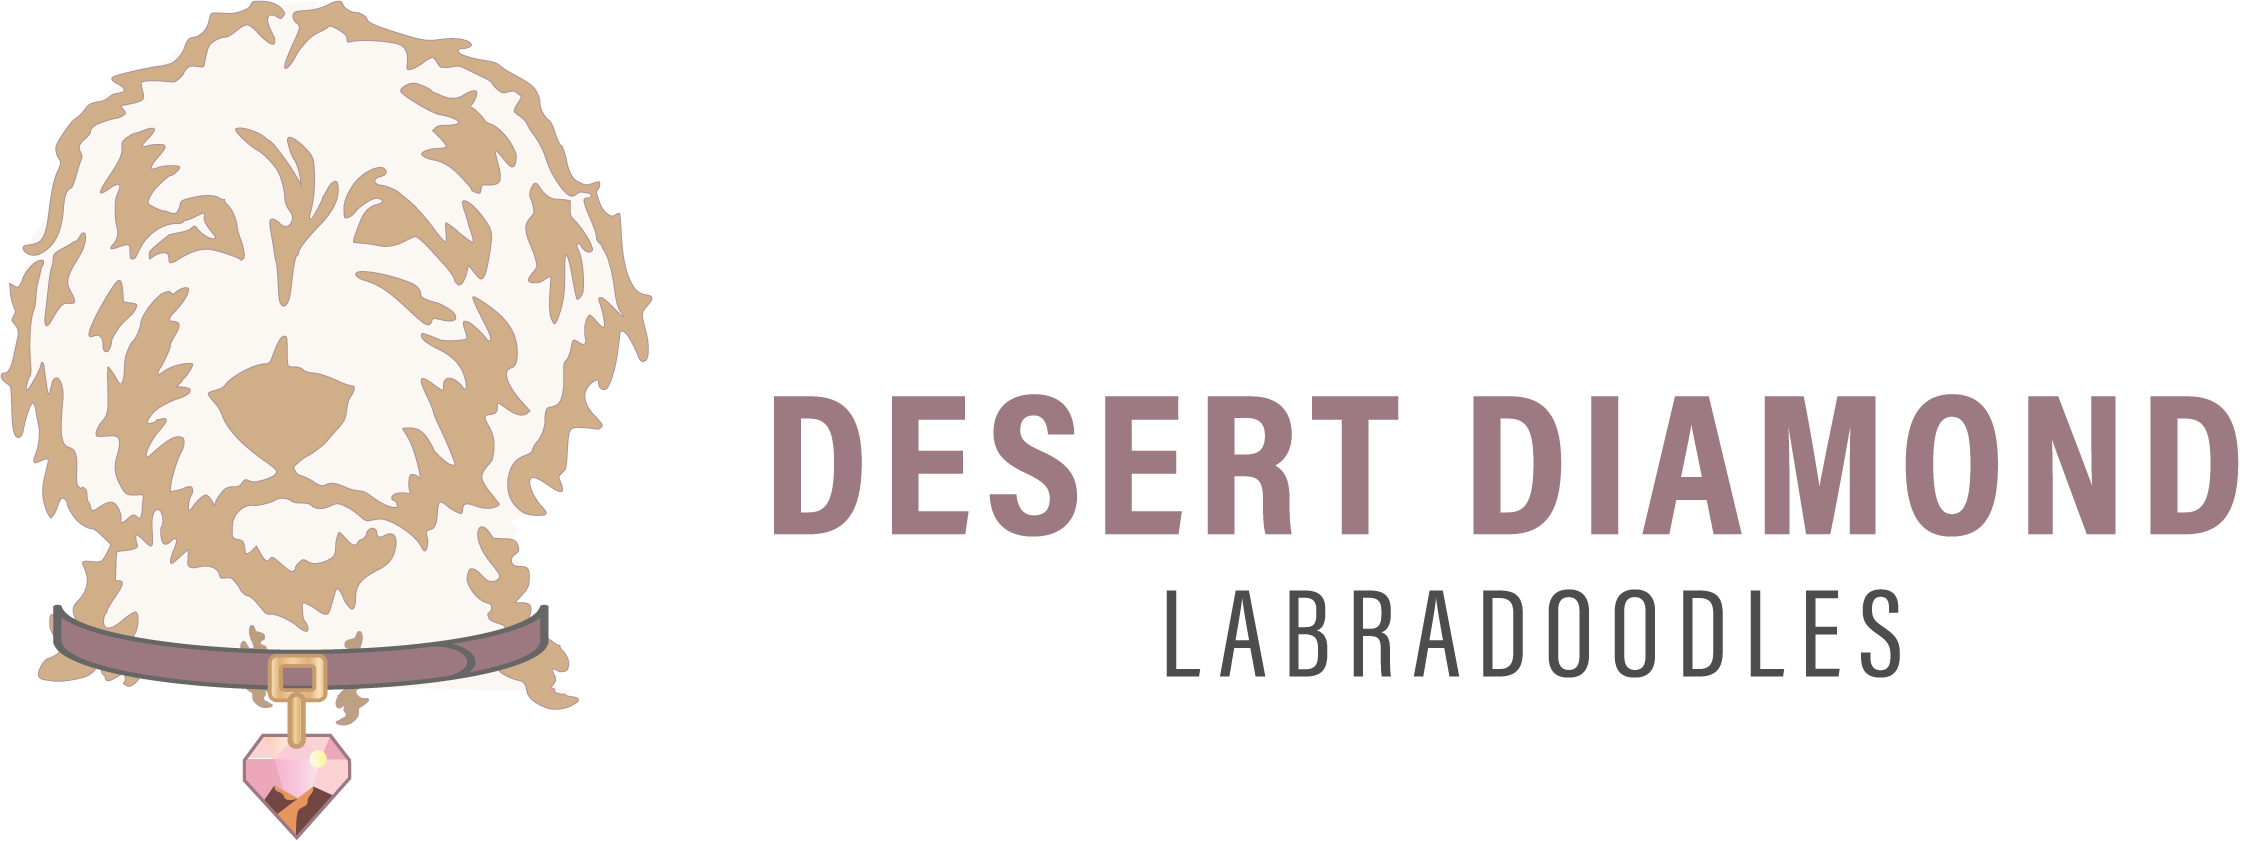 Desert Diamond Labradoodles